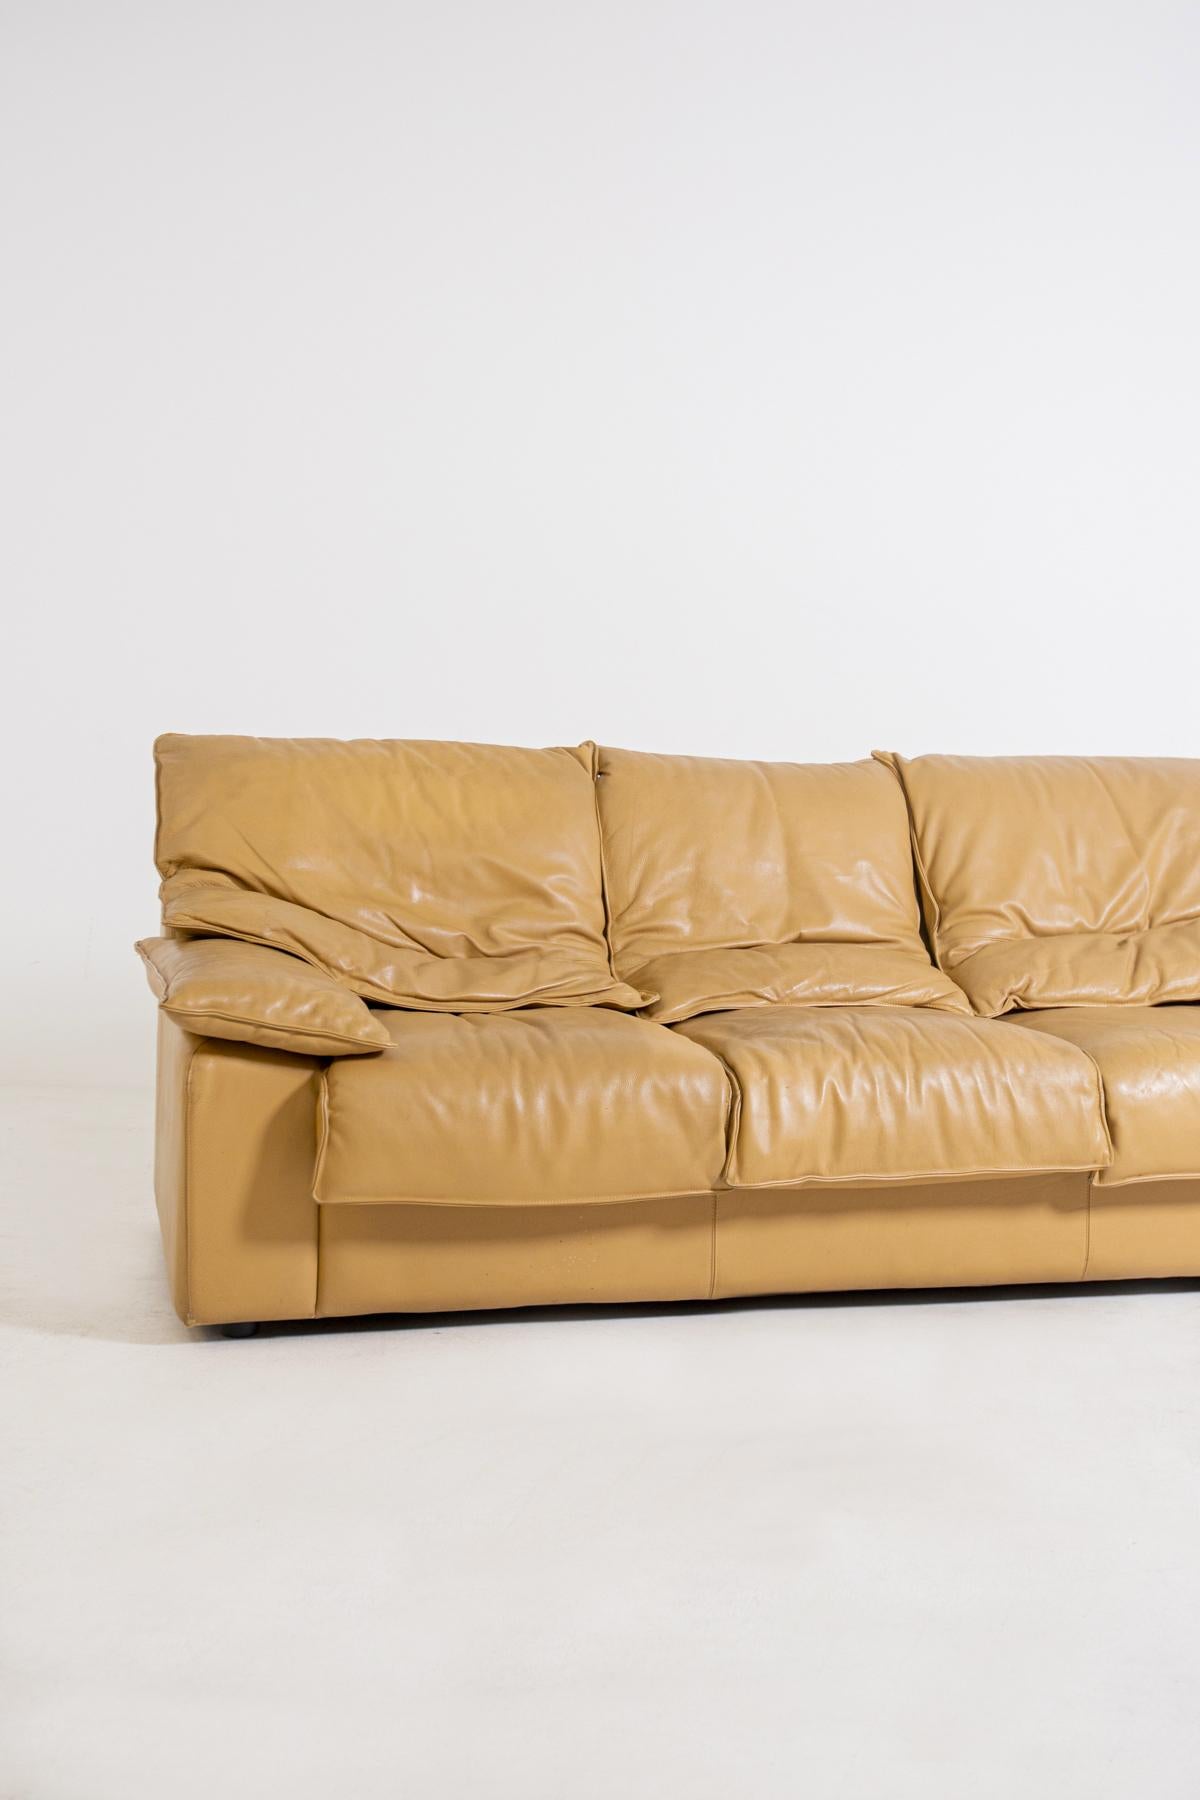 vintage italian leather sofas